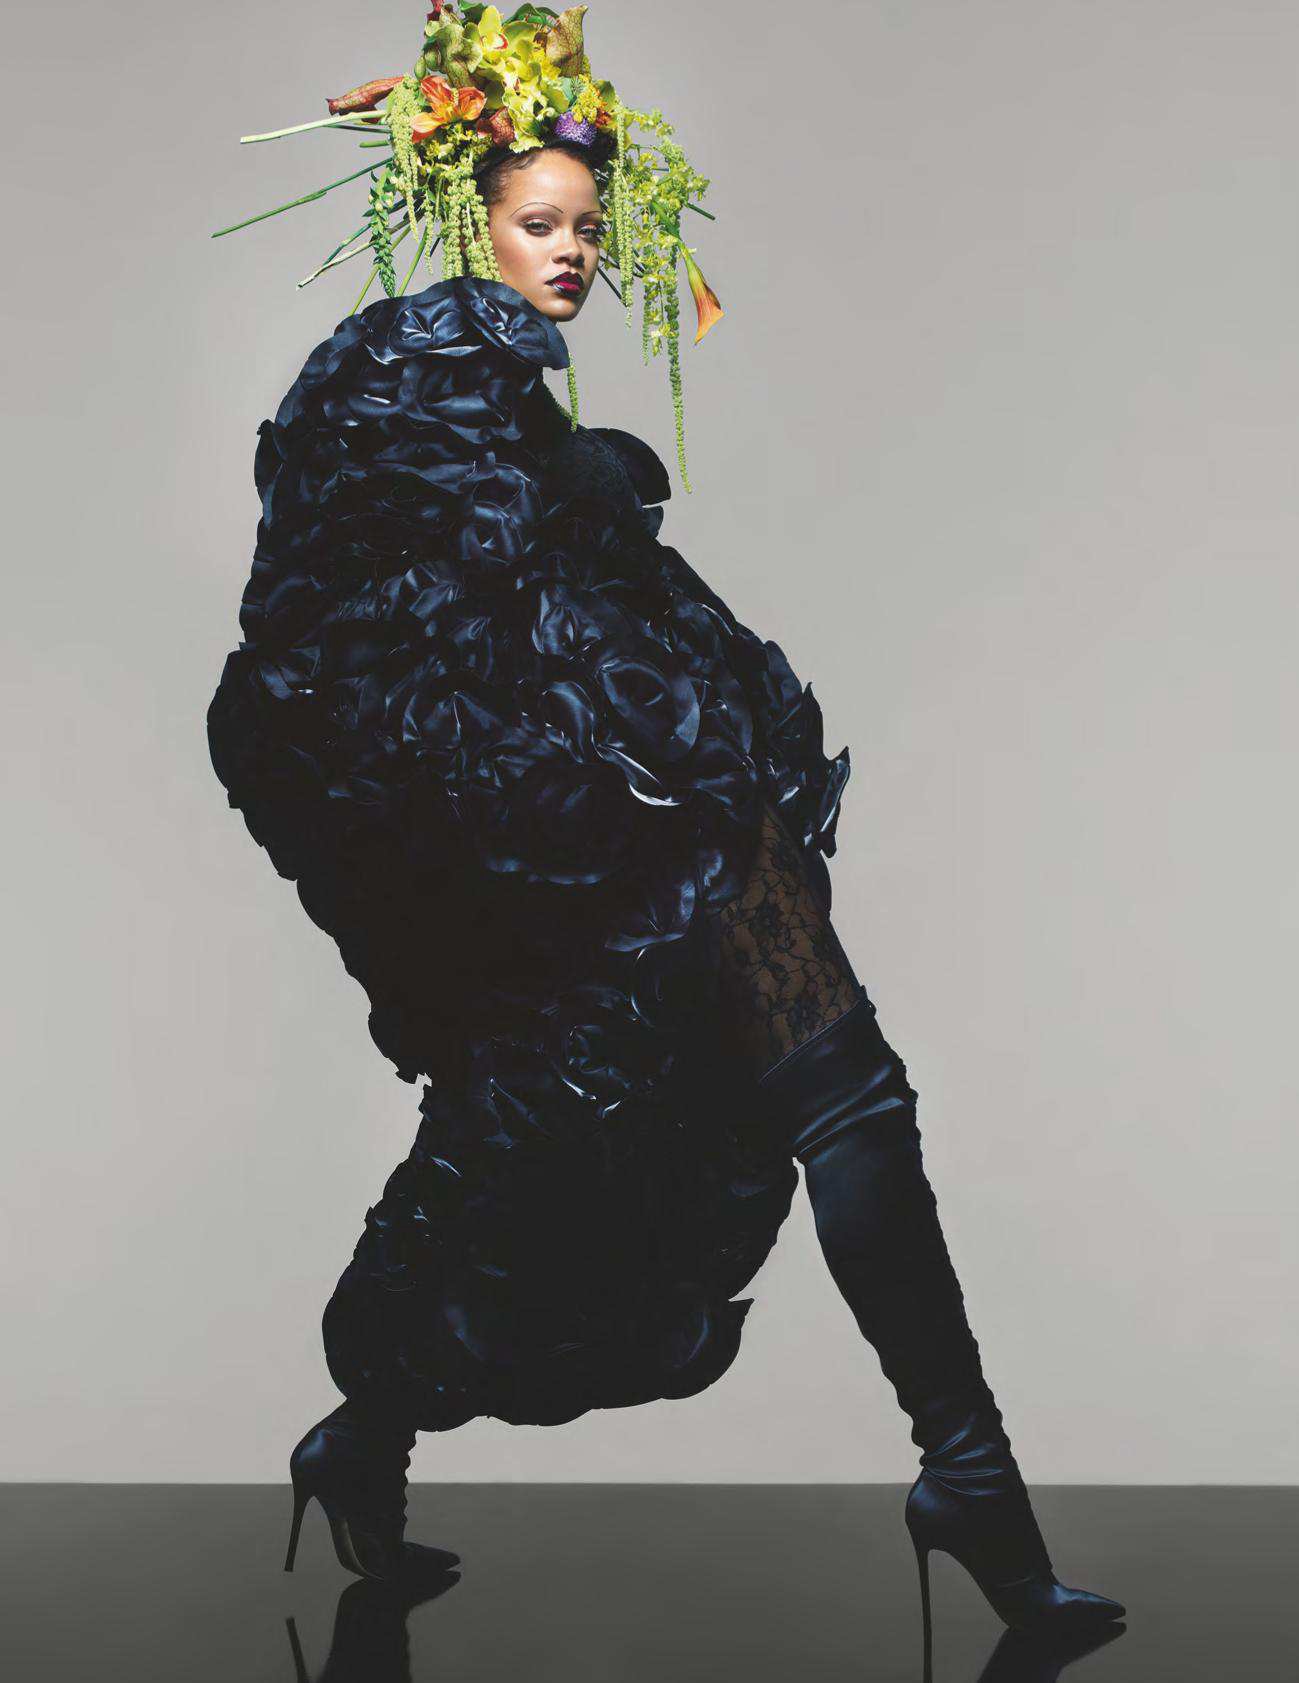 Rihanna by Nick Knight in Vogue UK Sept 2018 (3).jpg